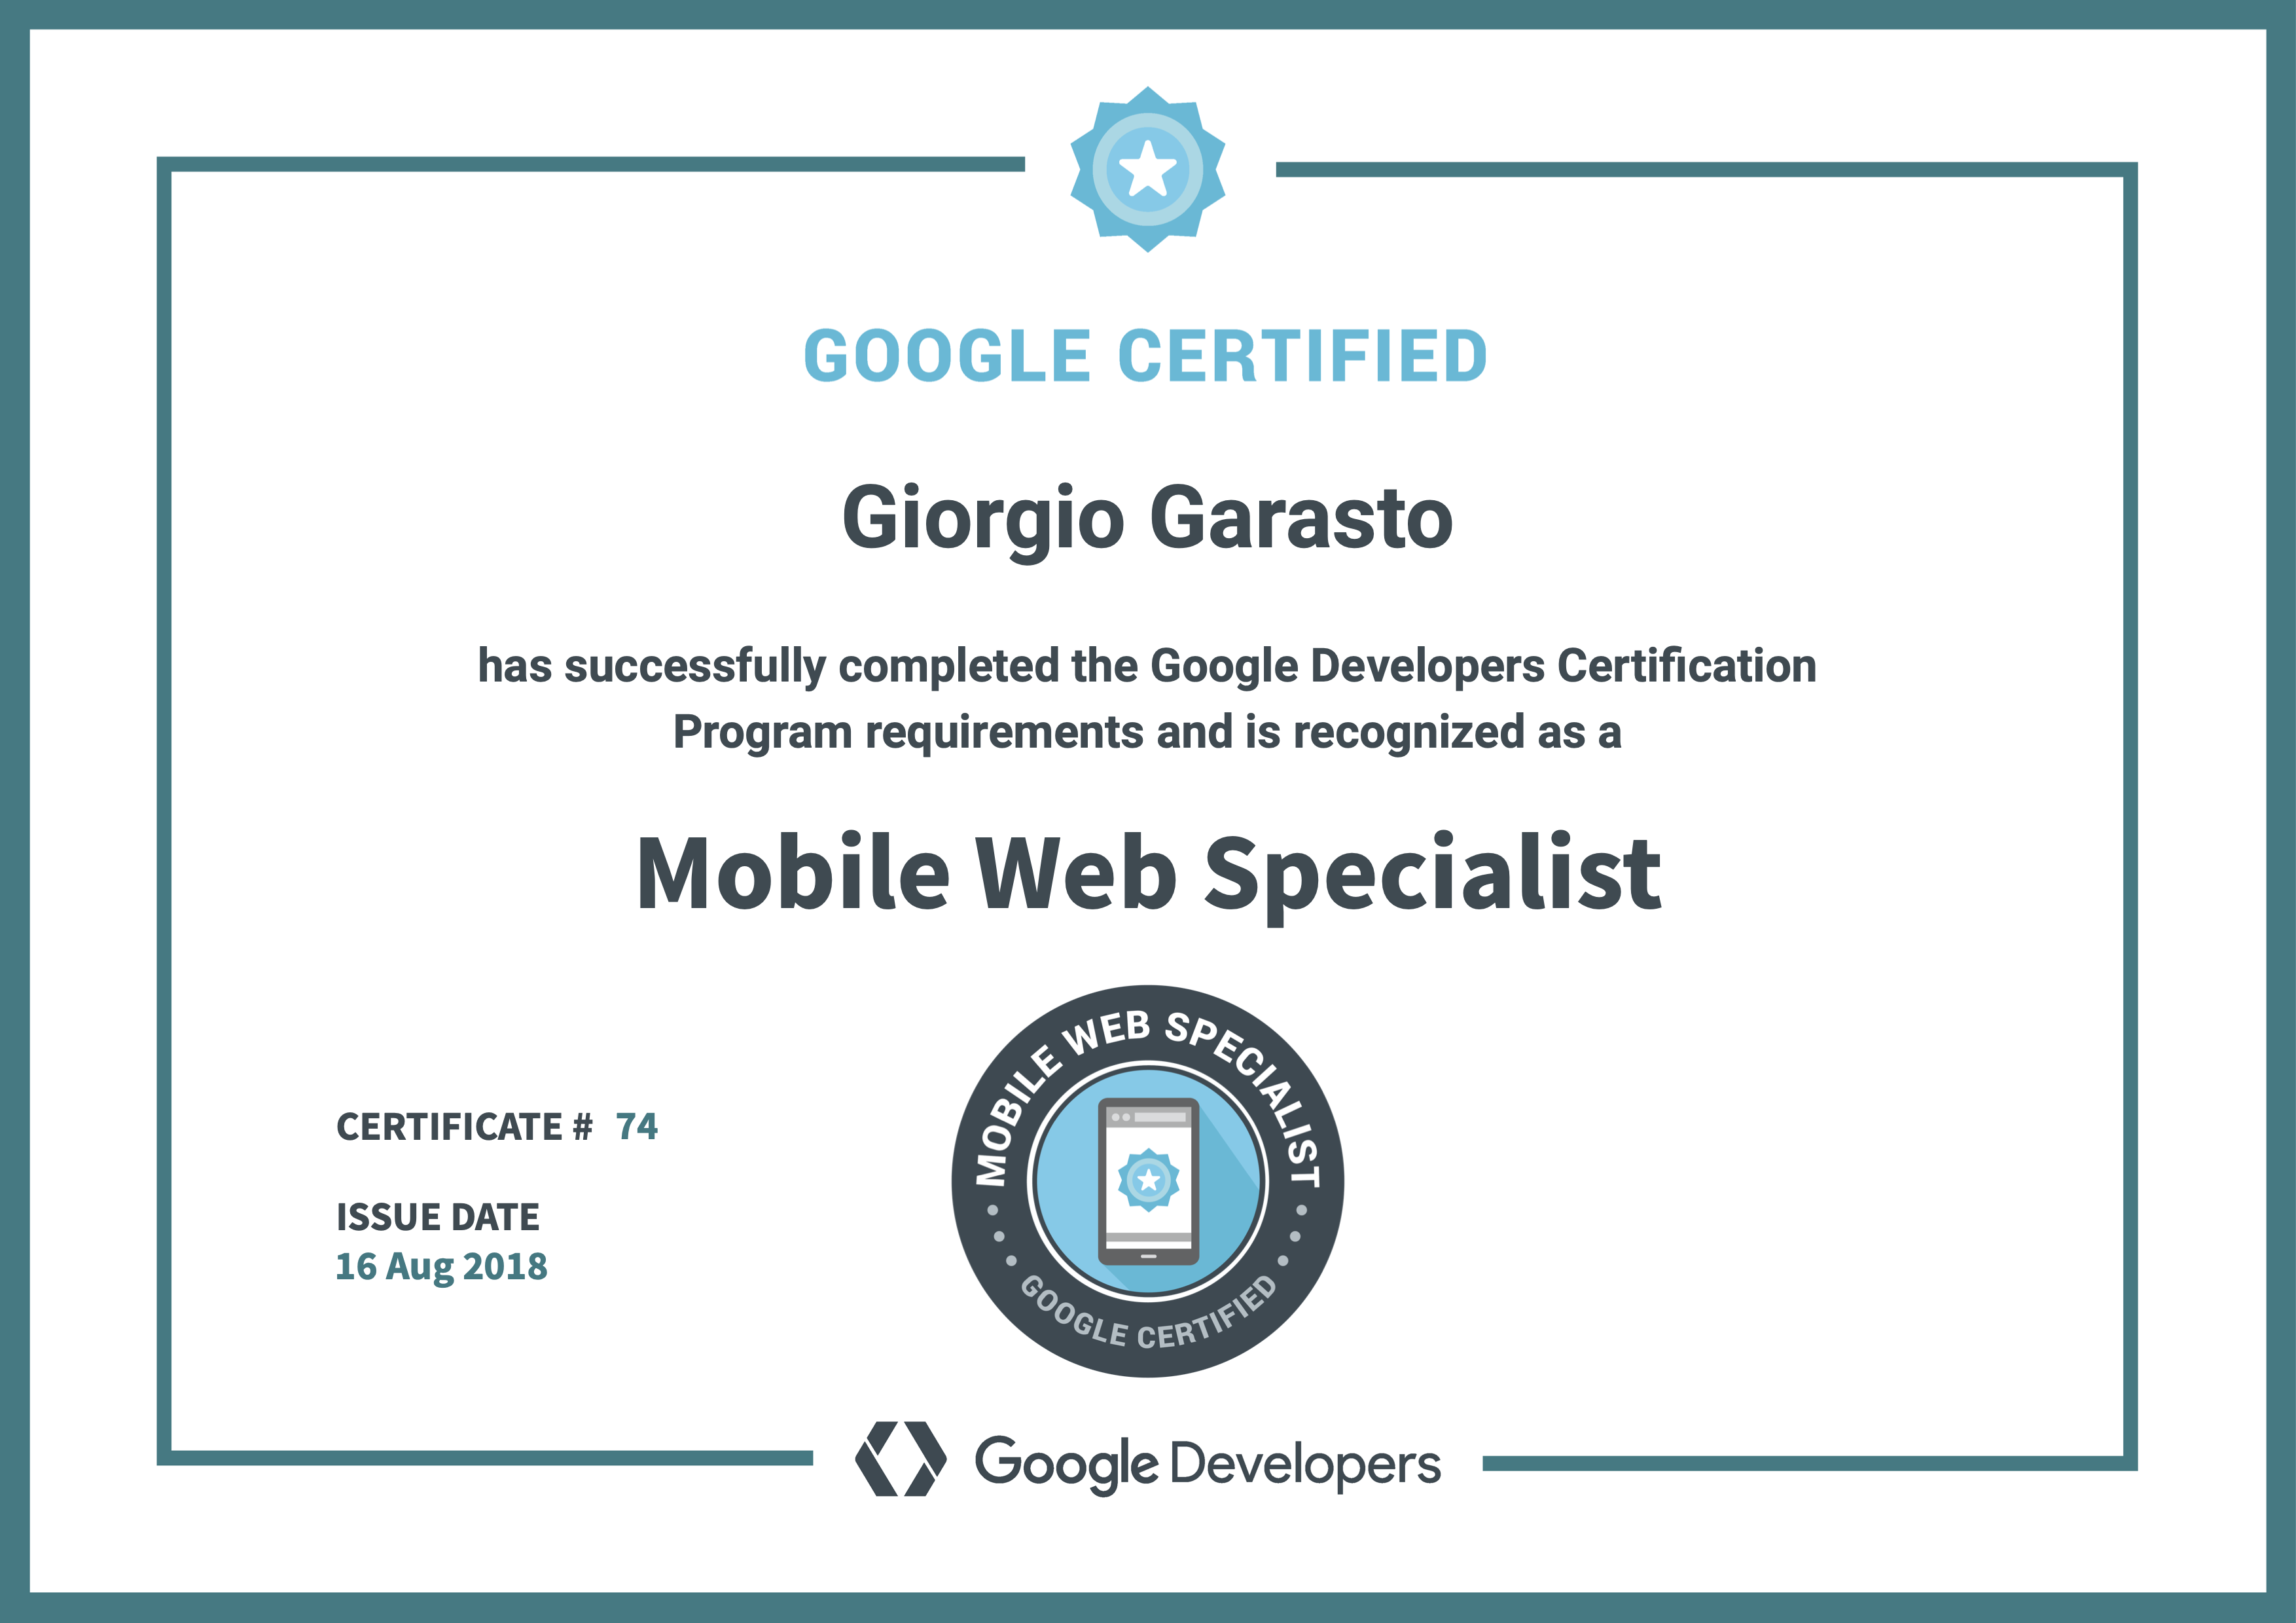 Mobile Web Specialist